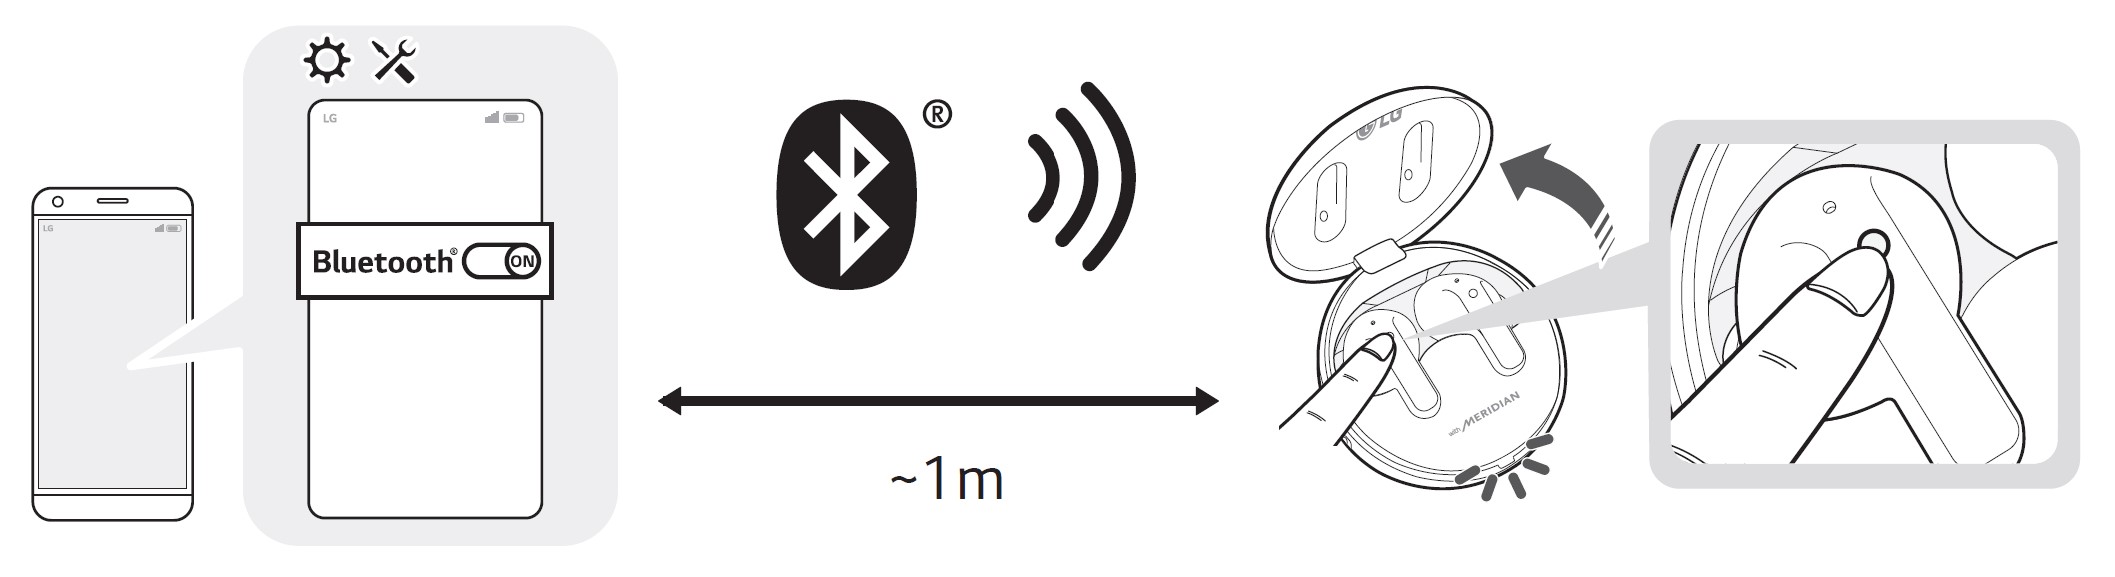 LG-Tone-Free-T90-Wireless-Bluetooth-Earbuds-User-Manual-10